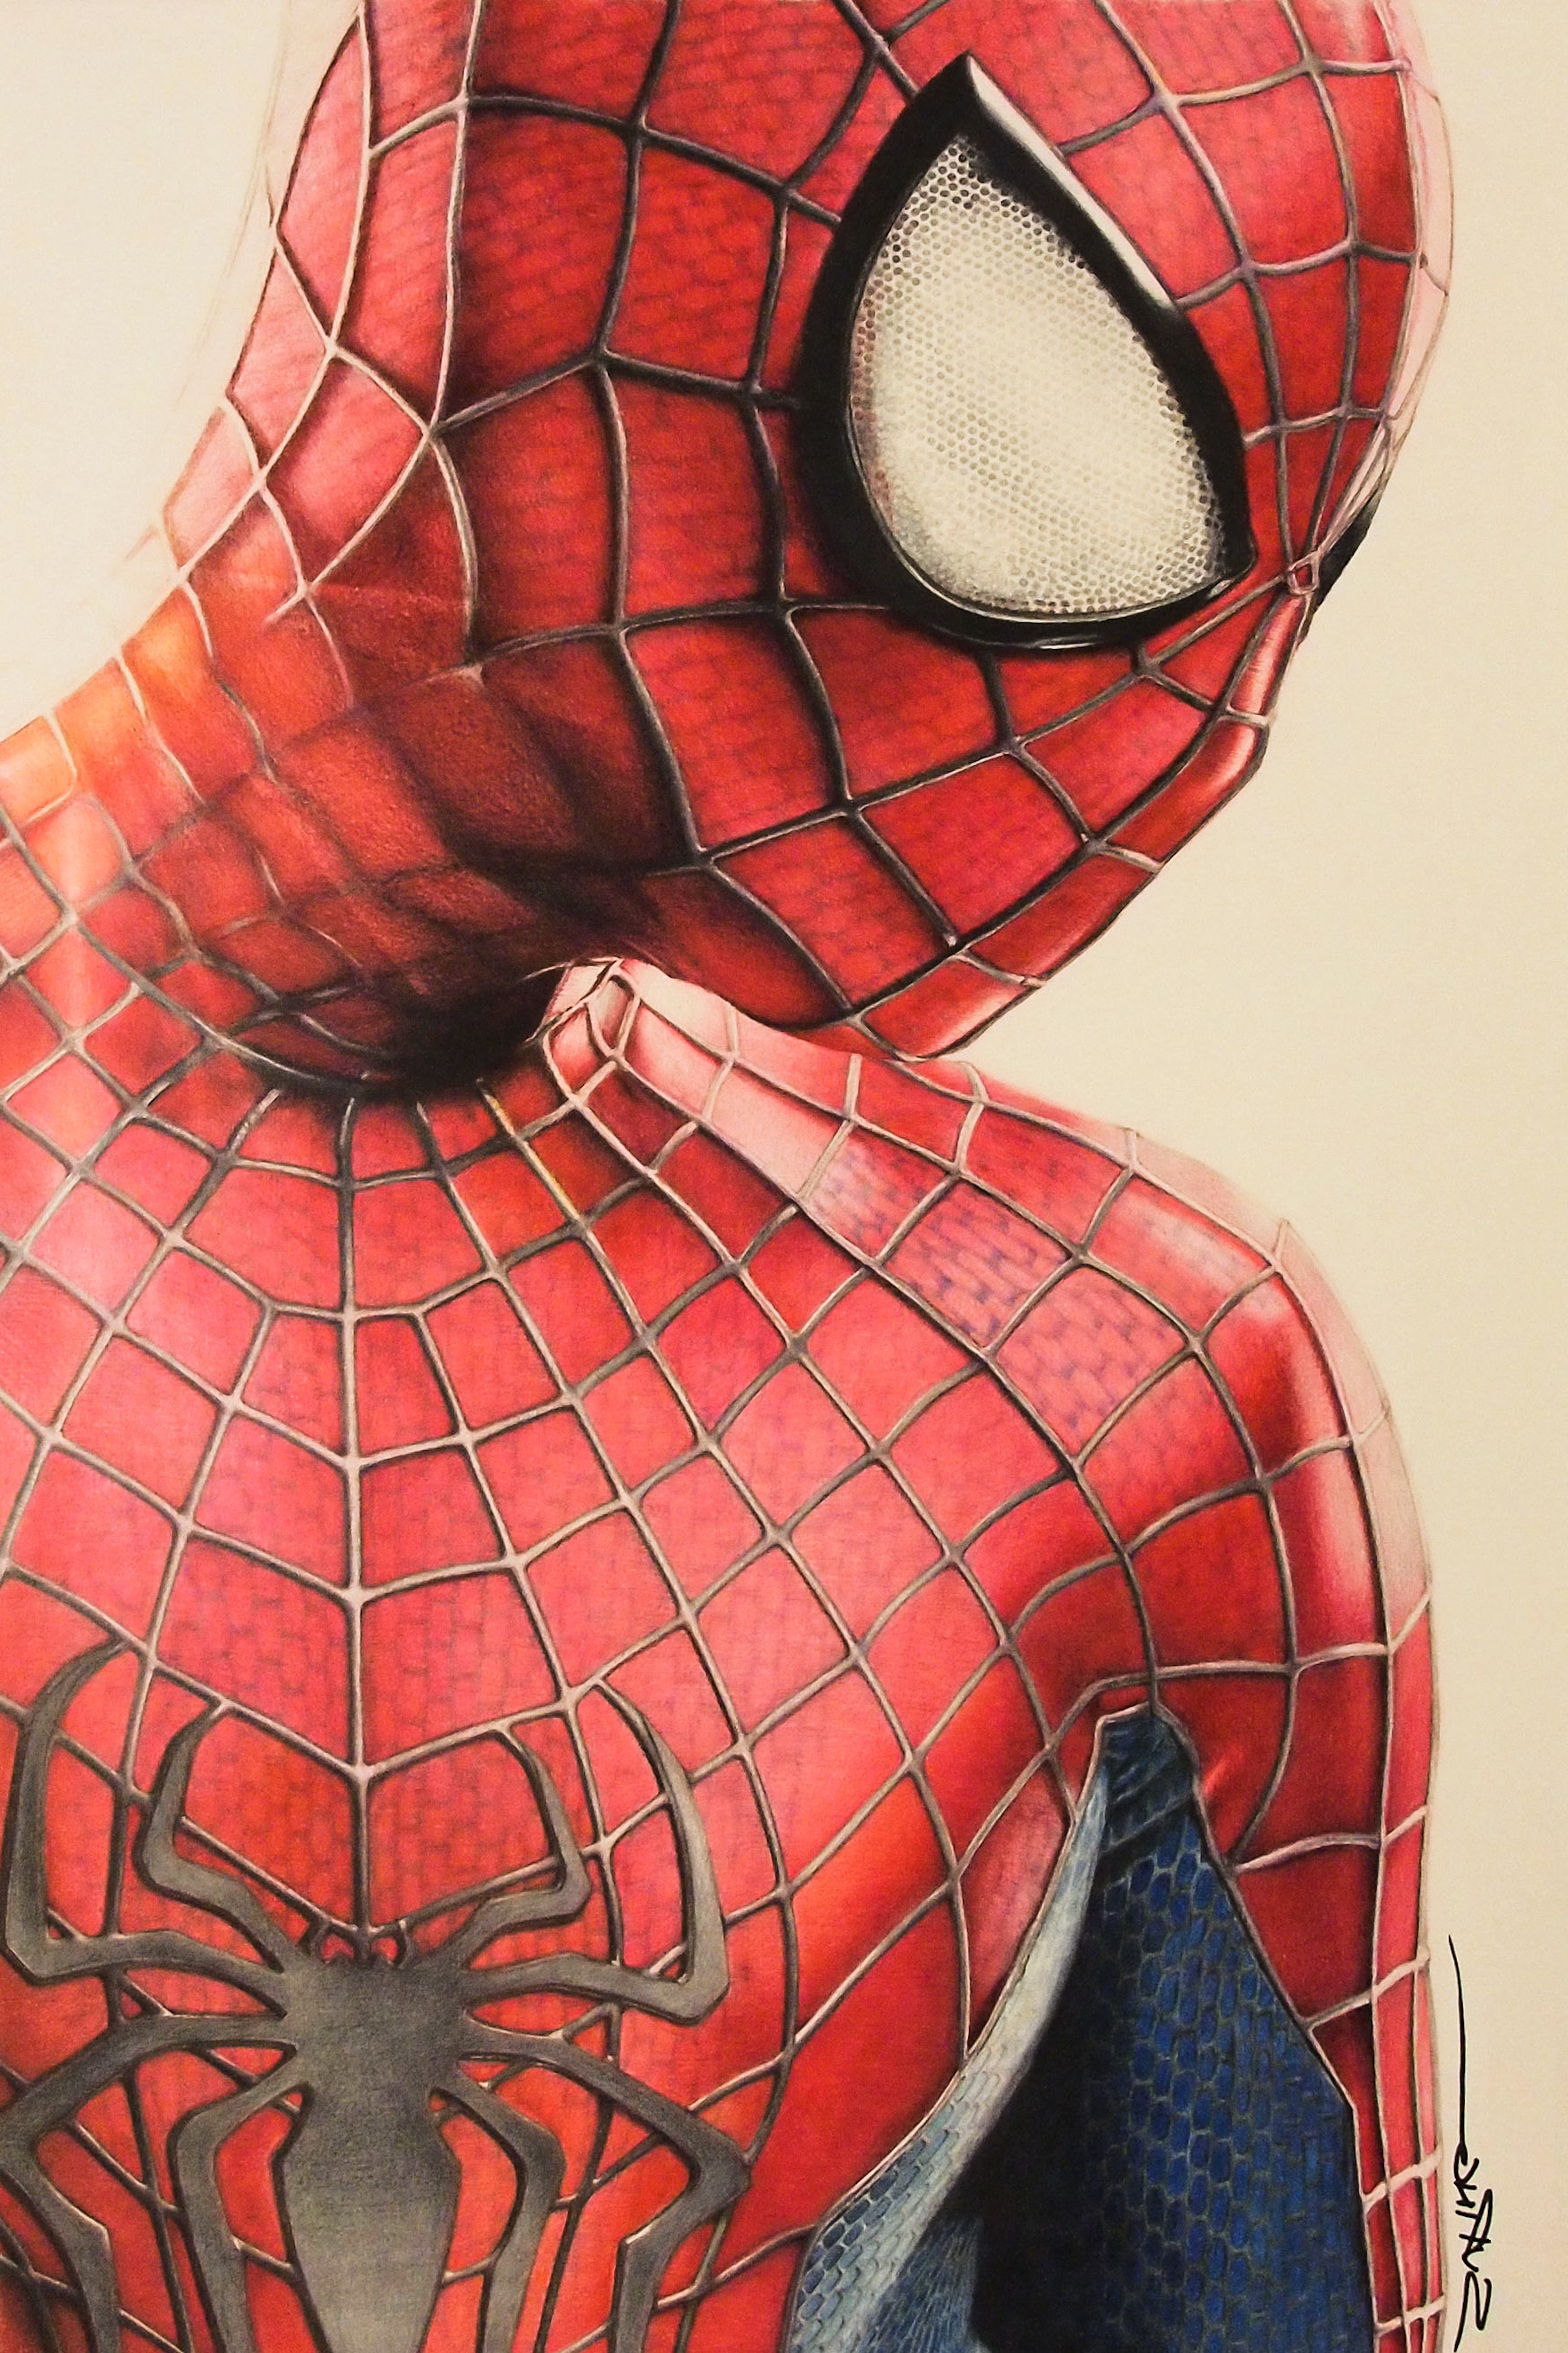 Dessin Spiderman Couleur Élégant Photographie Drawn Spider Man Colored Pencil and In Color Drawn